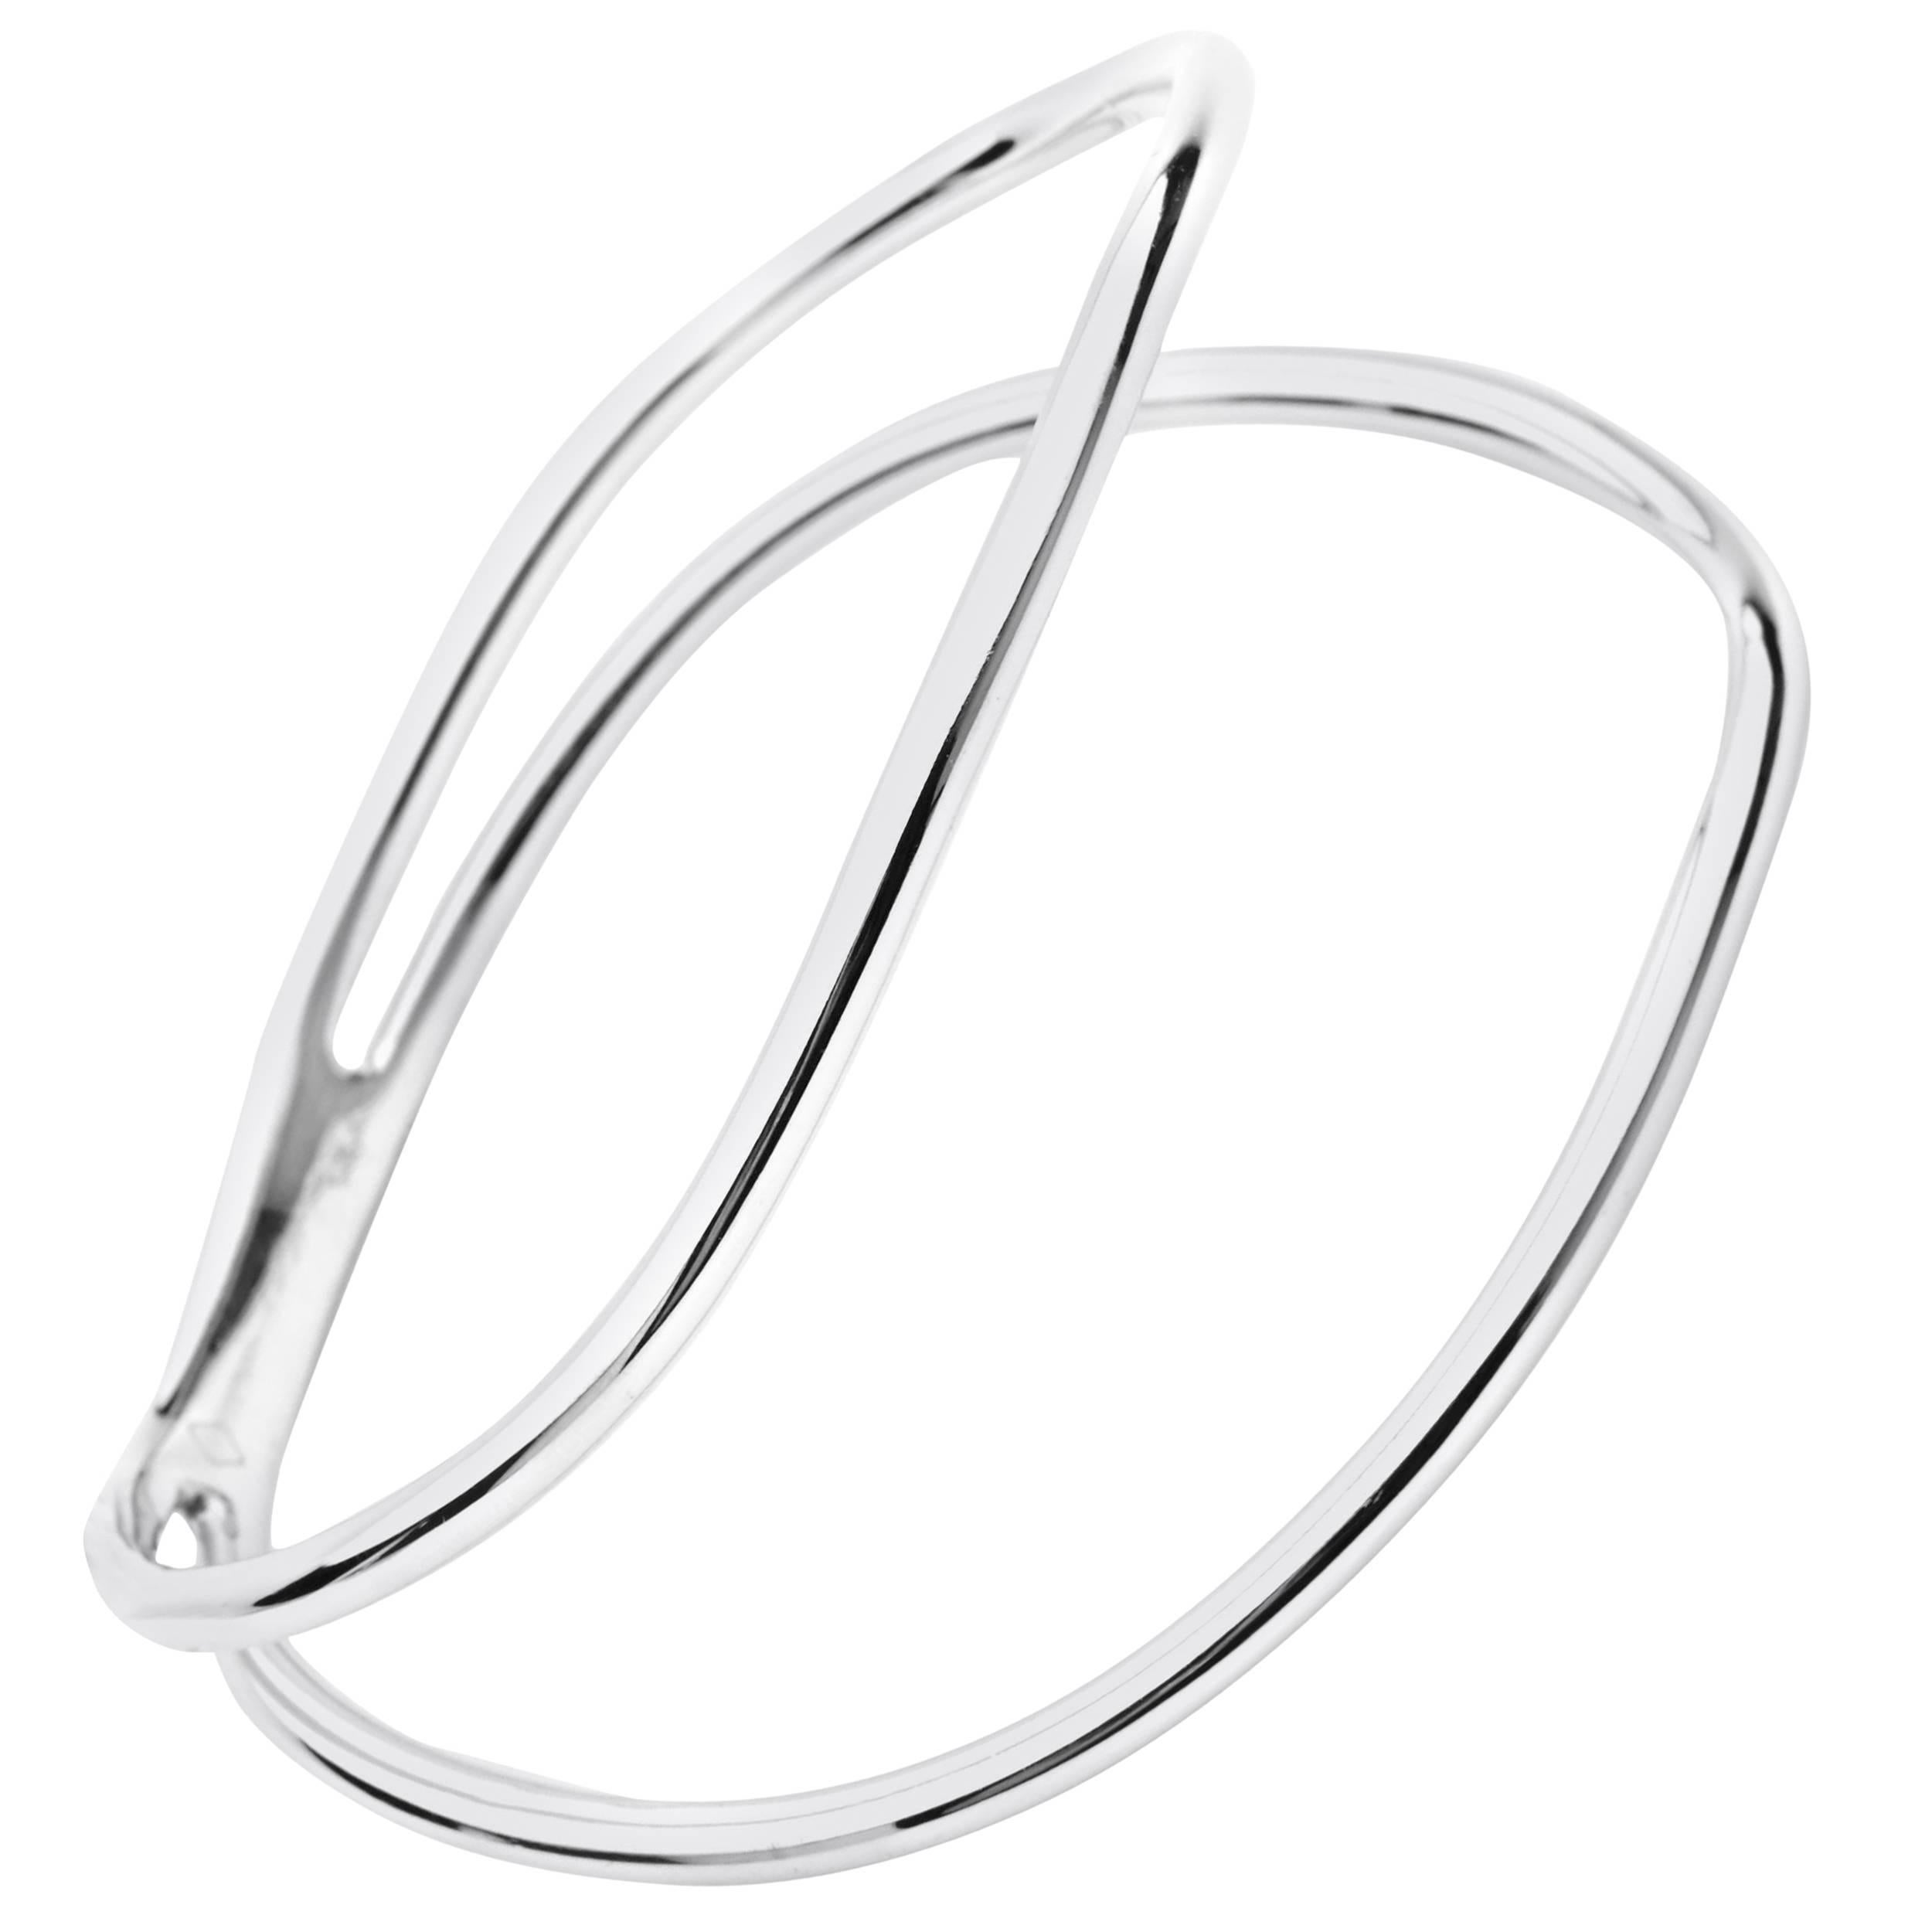 MAVIADA's Double Curved Bracelet White Rhodium Vermeil Stylish Modern Bracelet